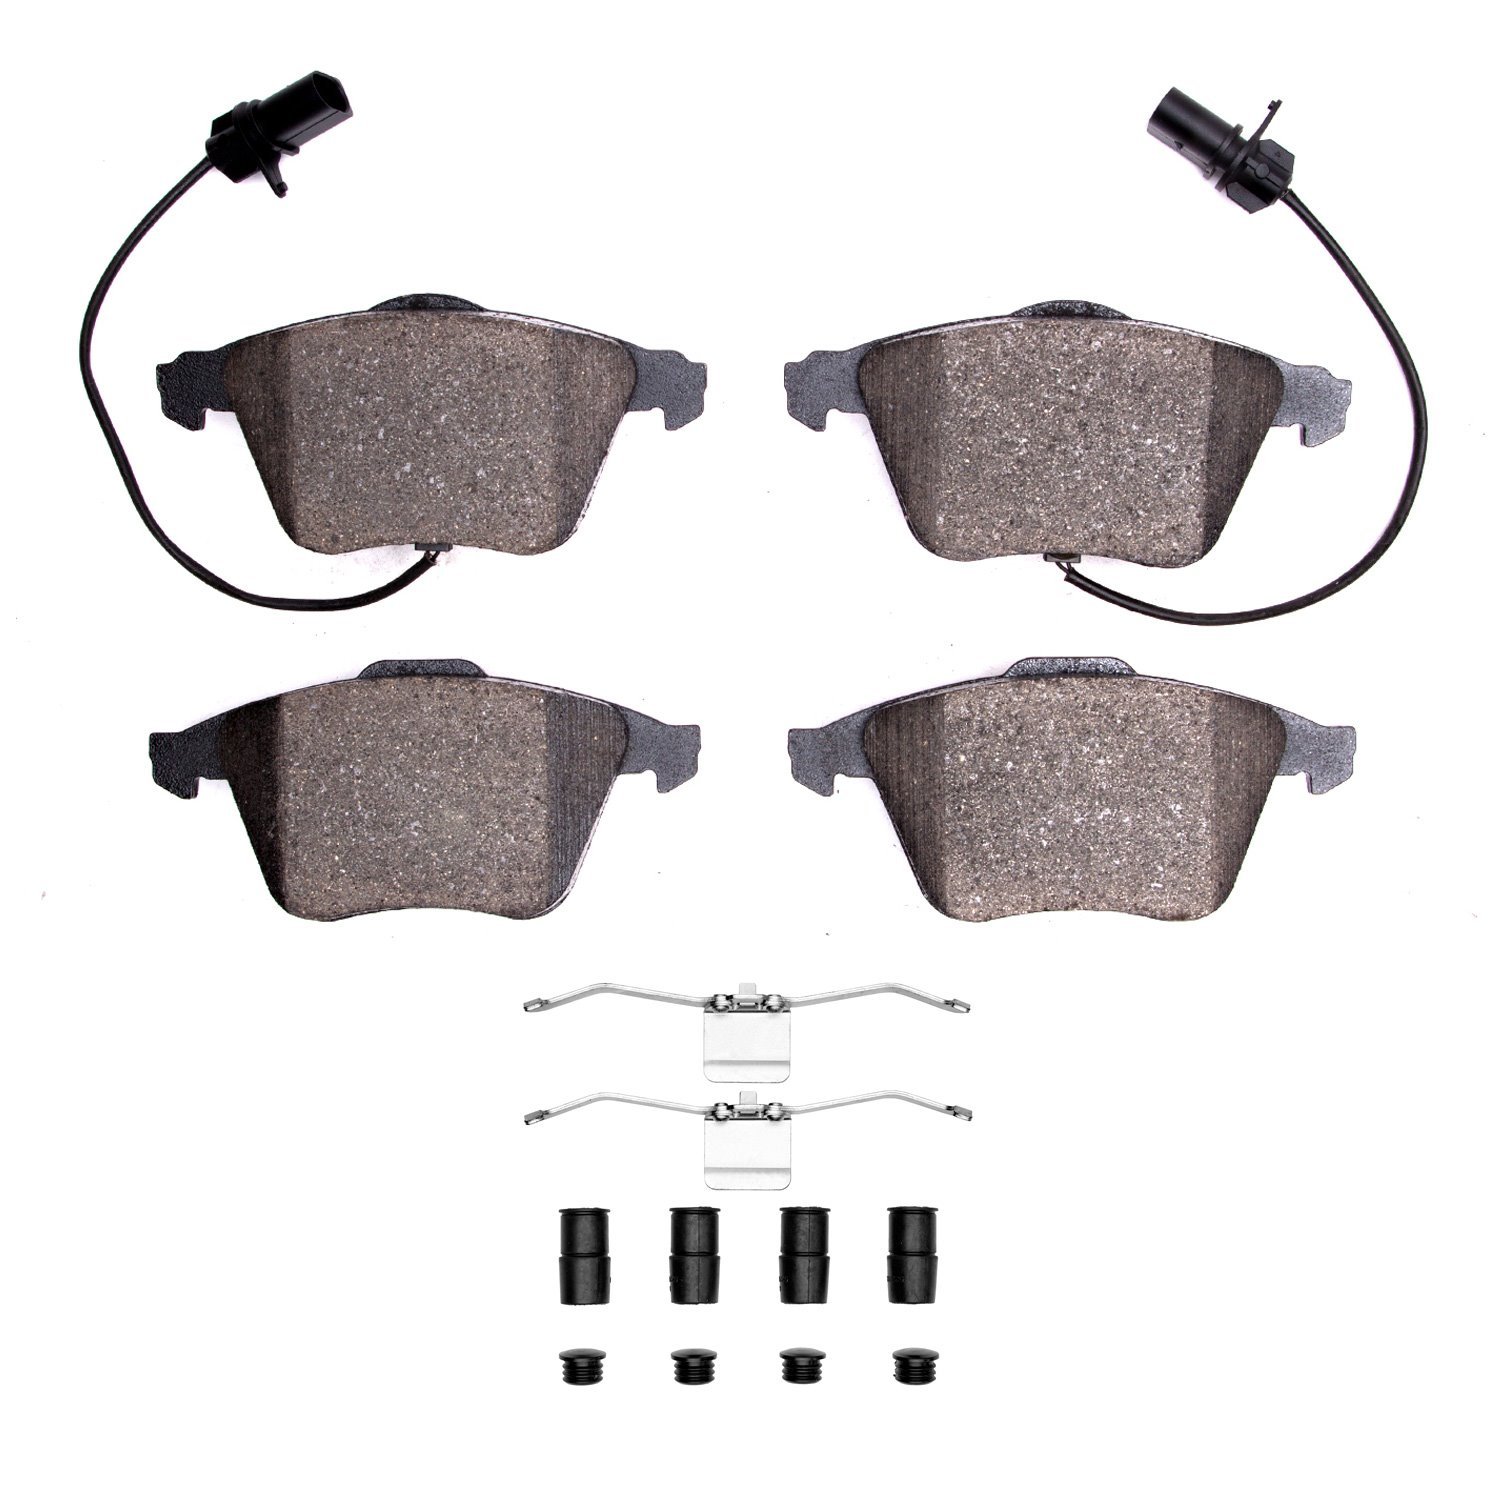 1310-0915-12 3000-Series Ceramic Brake Pads & Hardware Kit, 2000-2011 Audi/Volkswagen, Position: Front